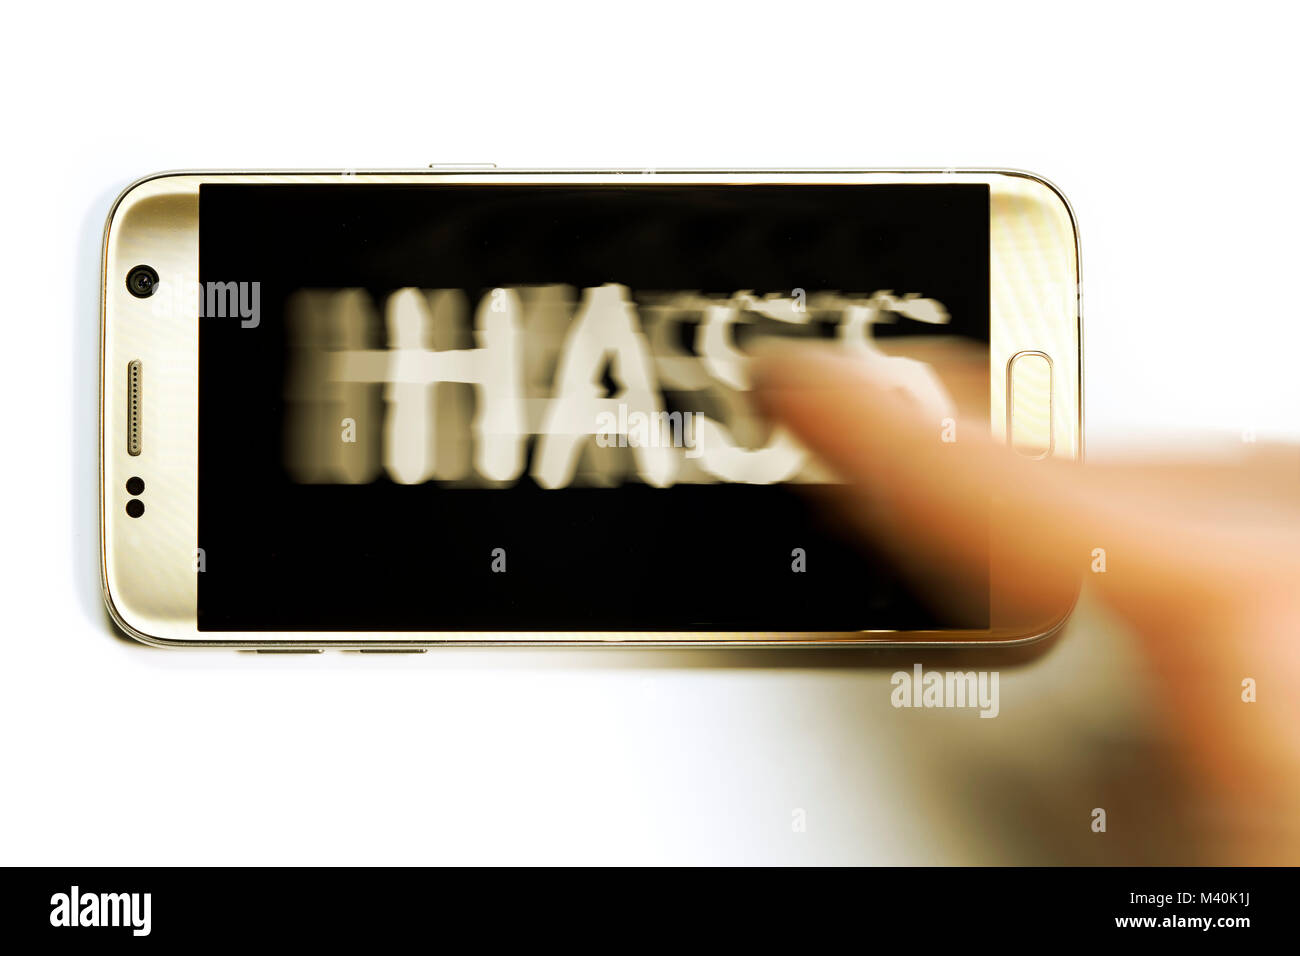 The word hatred swept by the mobile phone display, Das Wort Hass wird vom Handydisplay gewischt Stock Photo